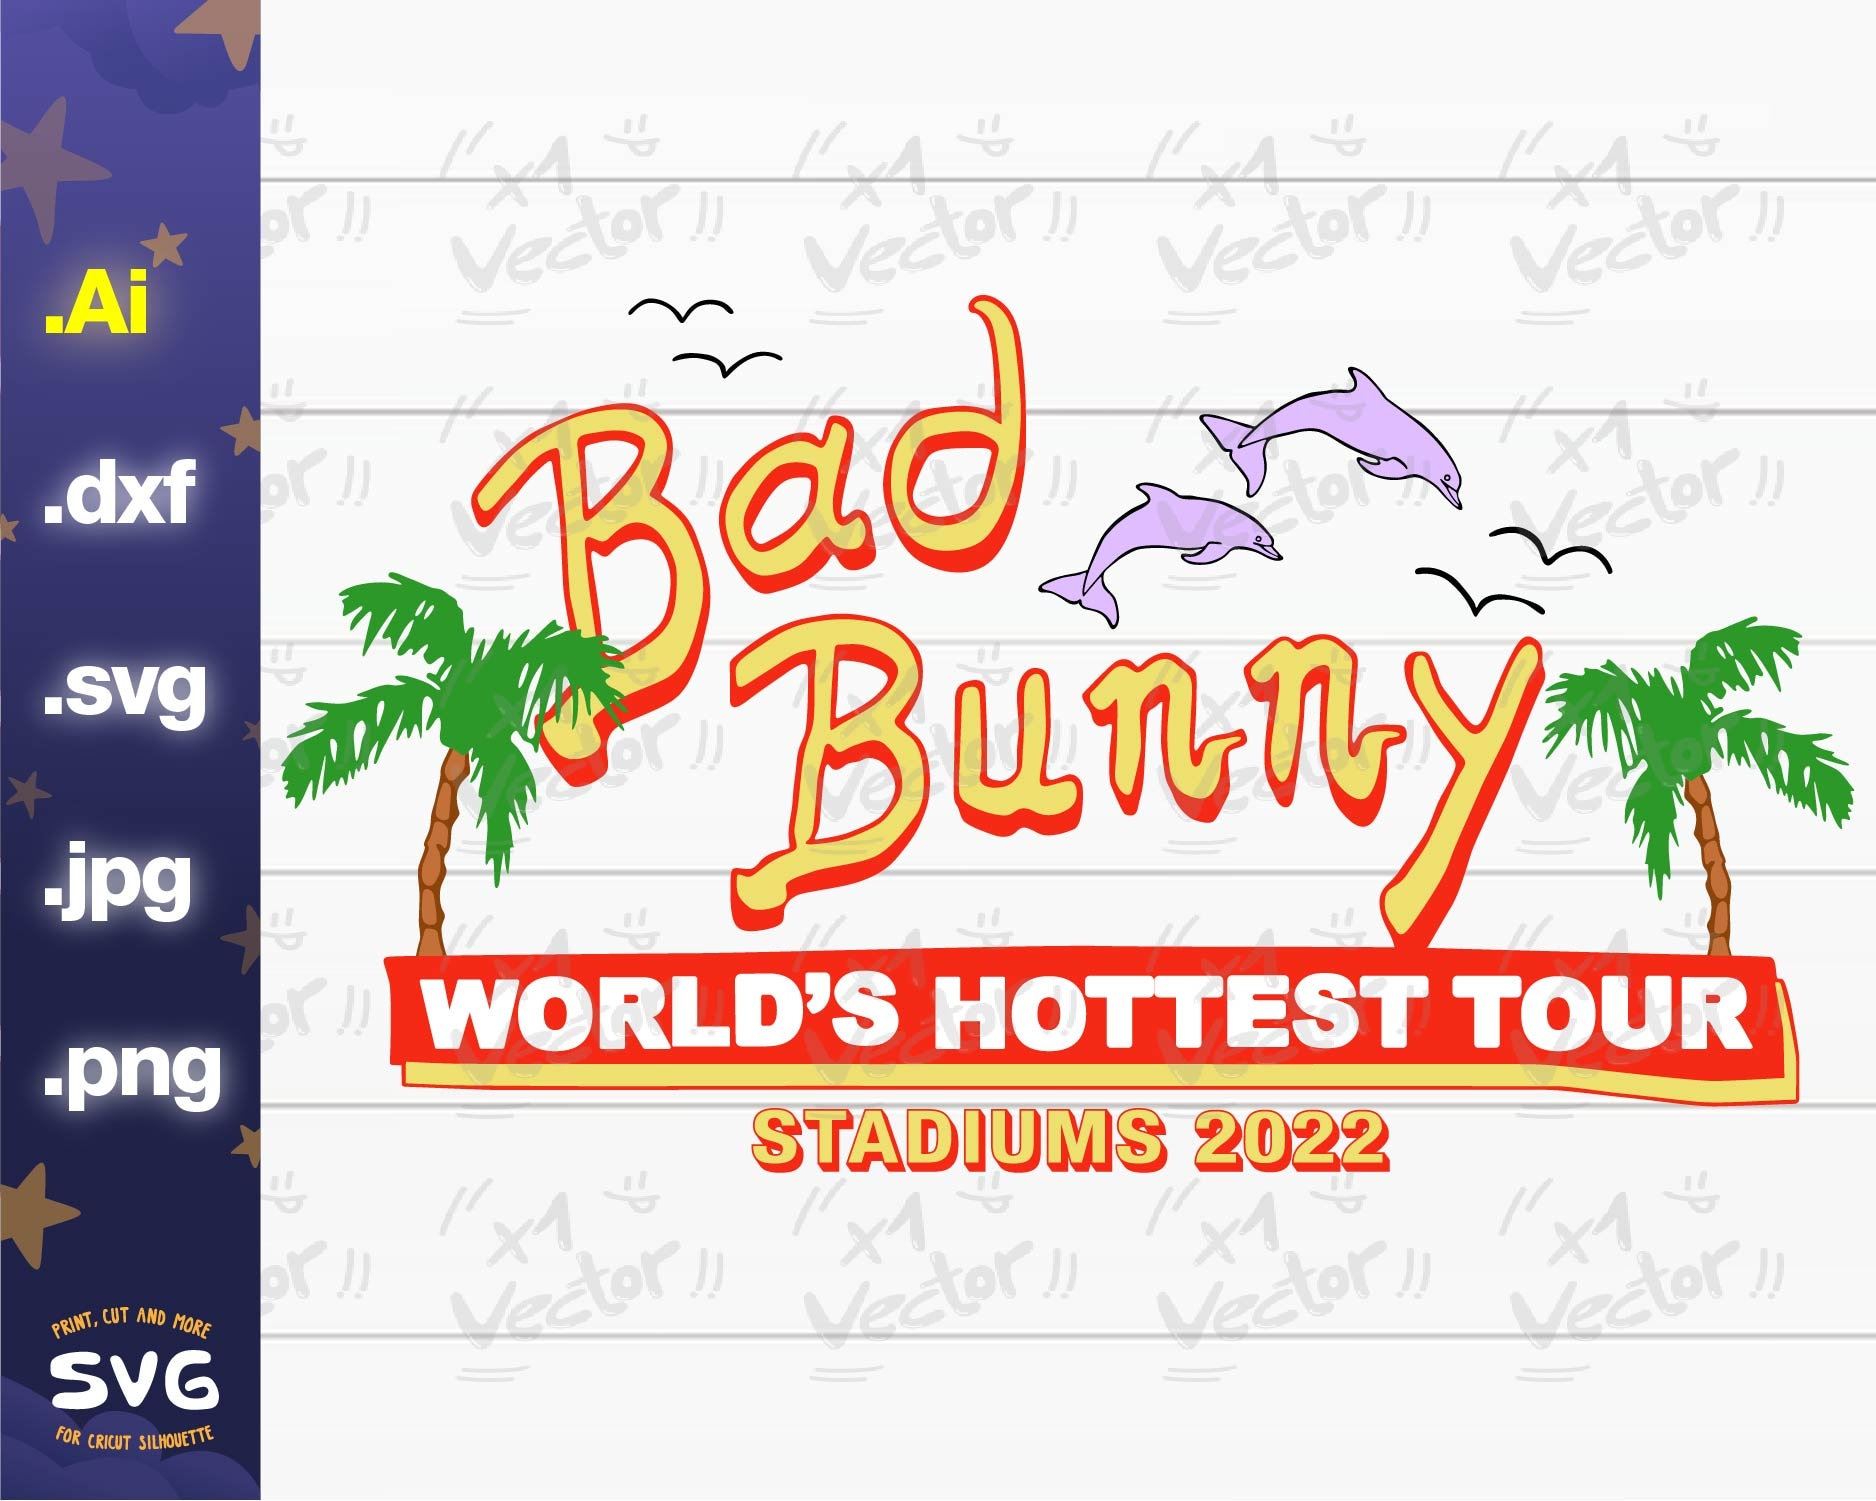 Bad bunny world's hottest tour SVG, PNG, JPG, for digital files cricut  silhouette, sublimation, decals, print, digital download